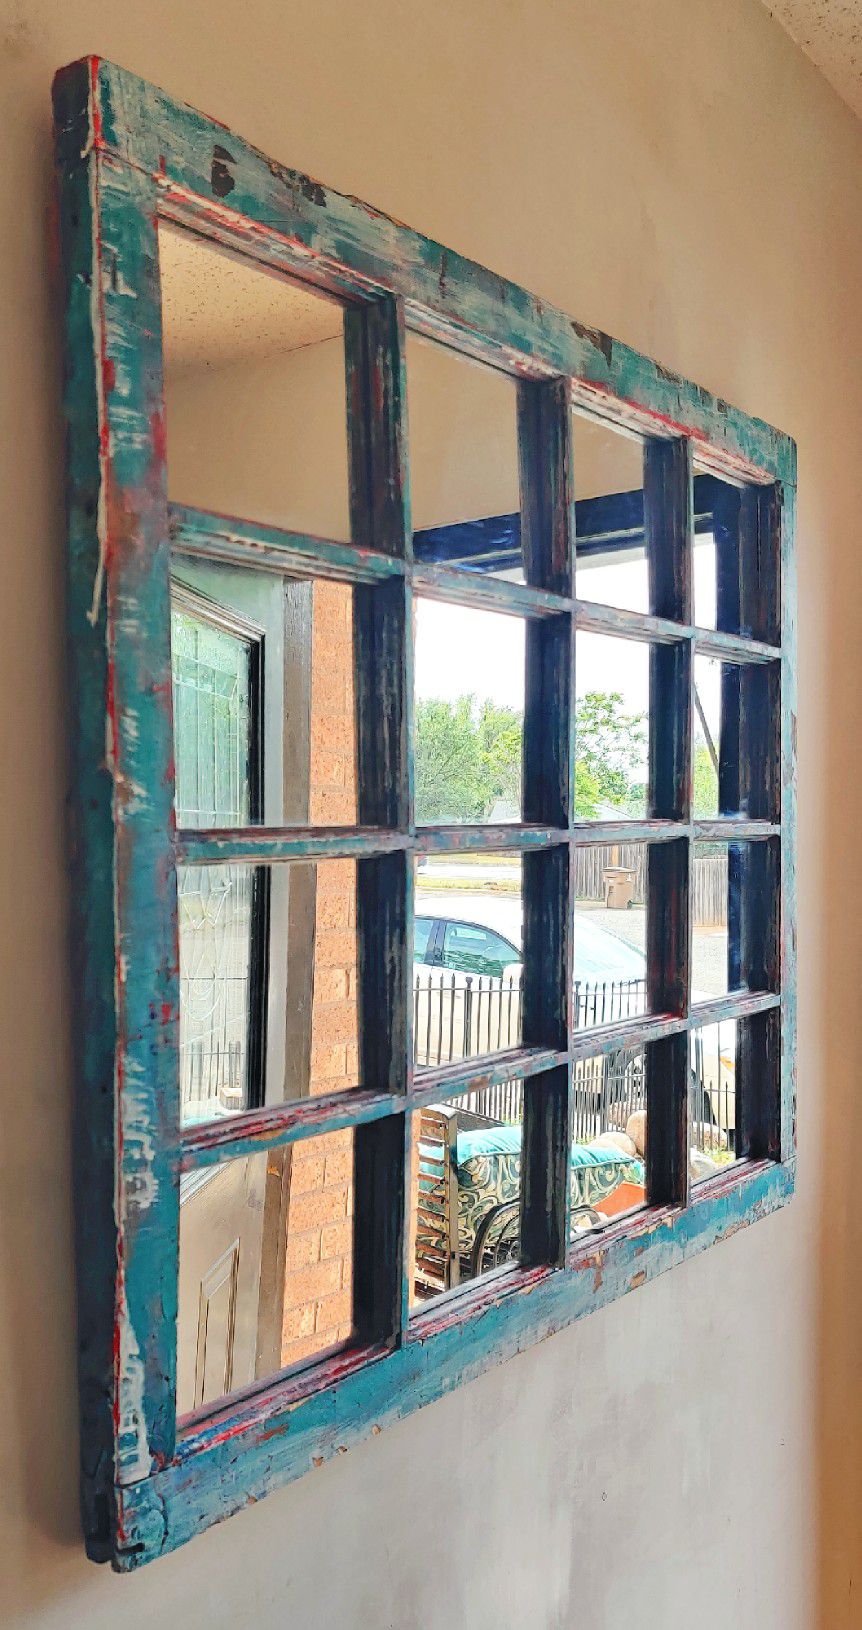 VTG Distressed Window Pane Mirror 